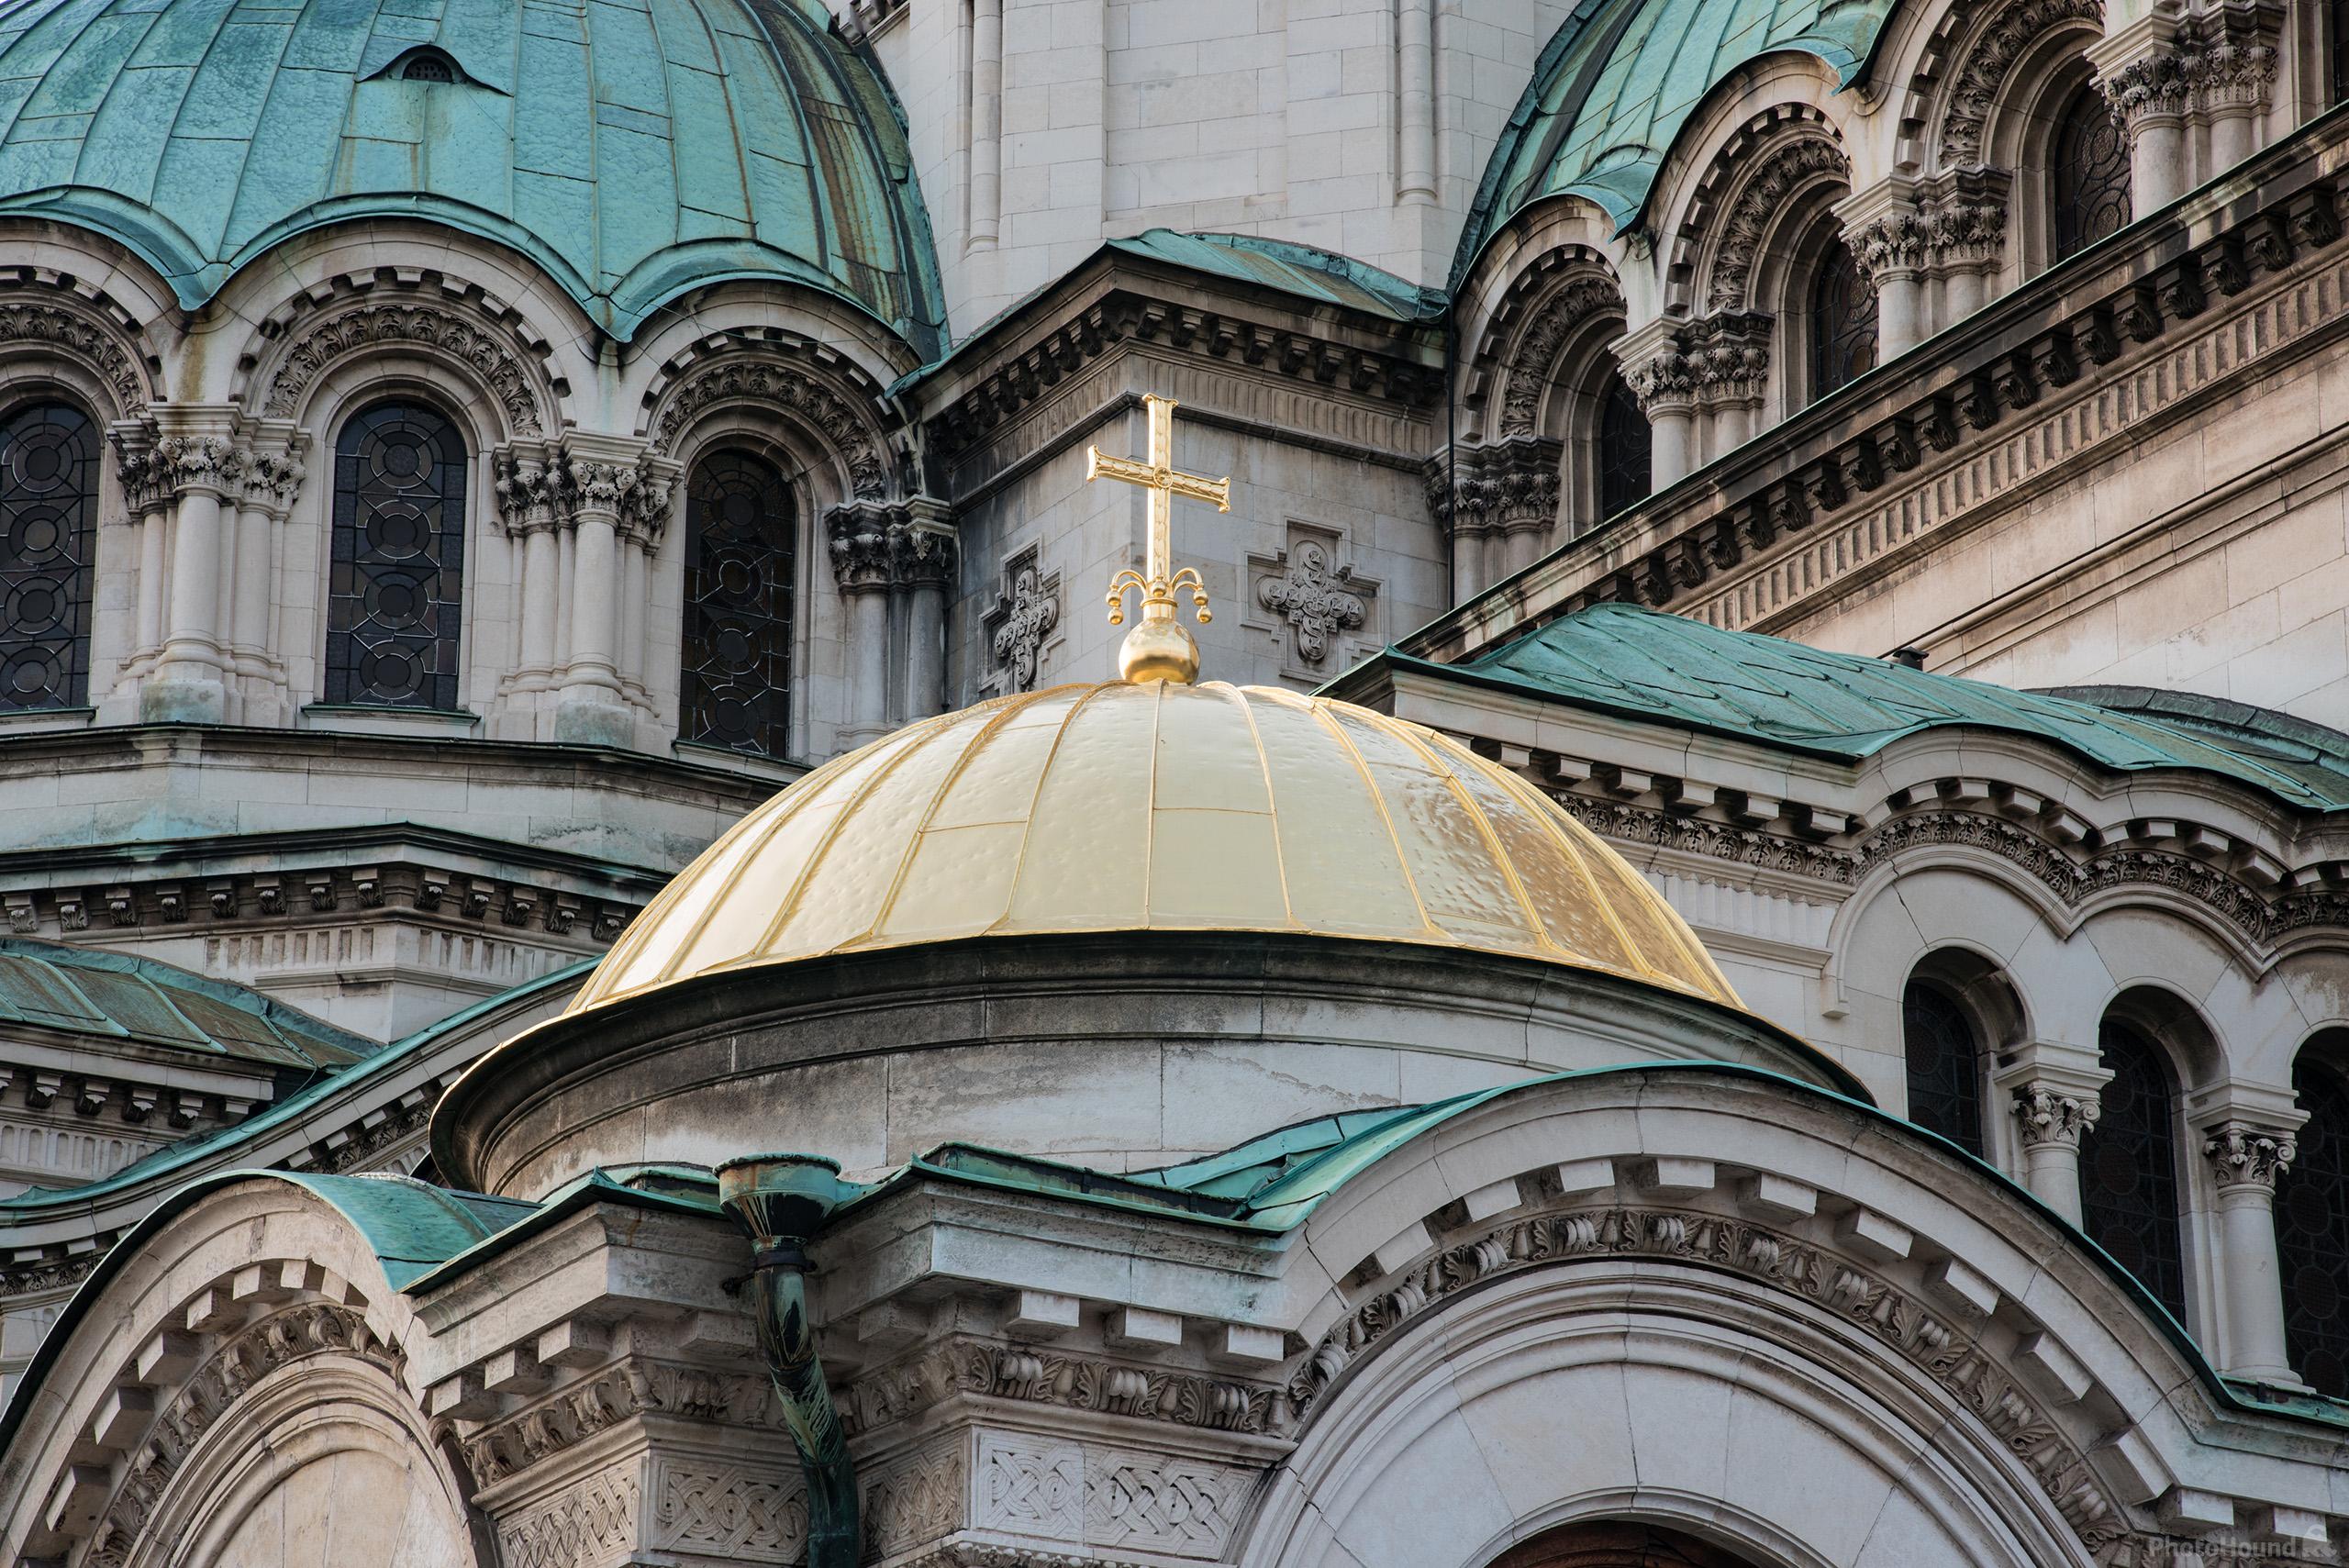 Image of Sofia - Alexander Nevsky Cathedral by Luka Esenko